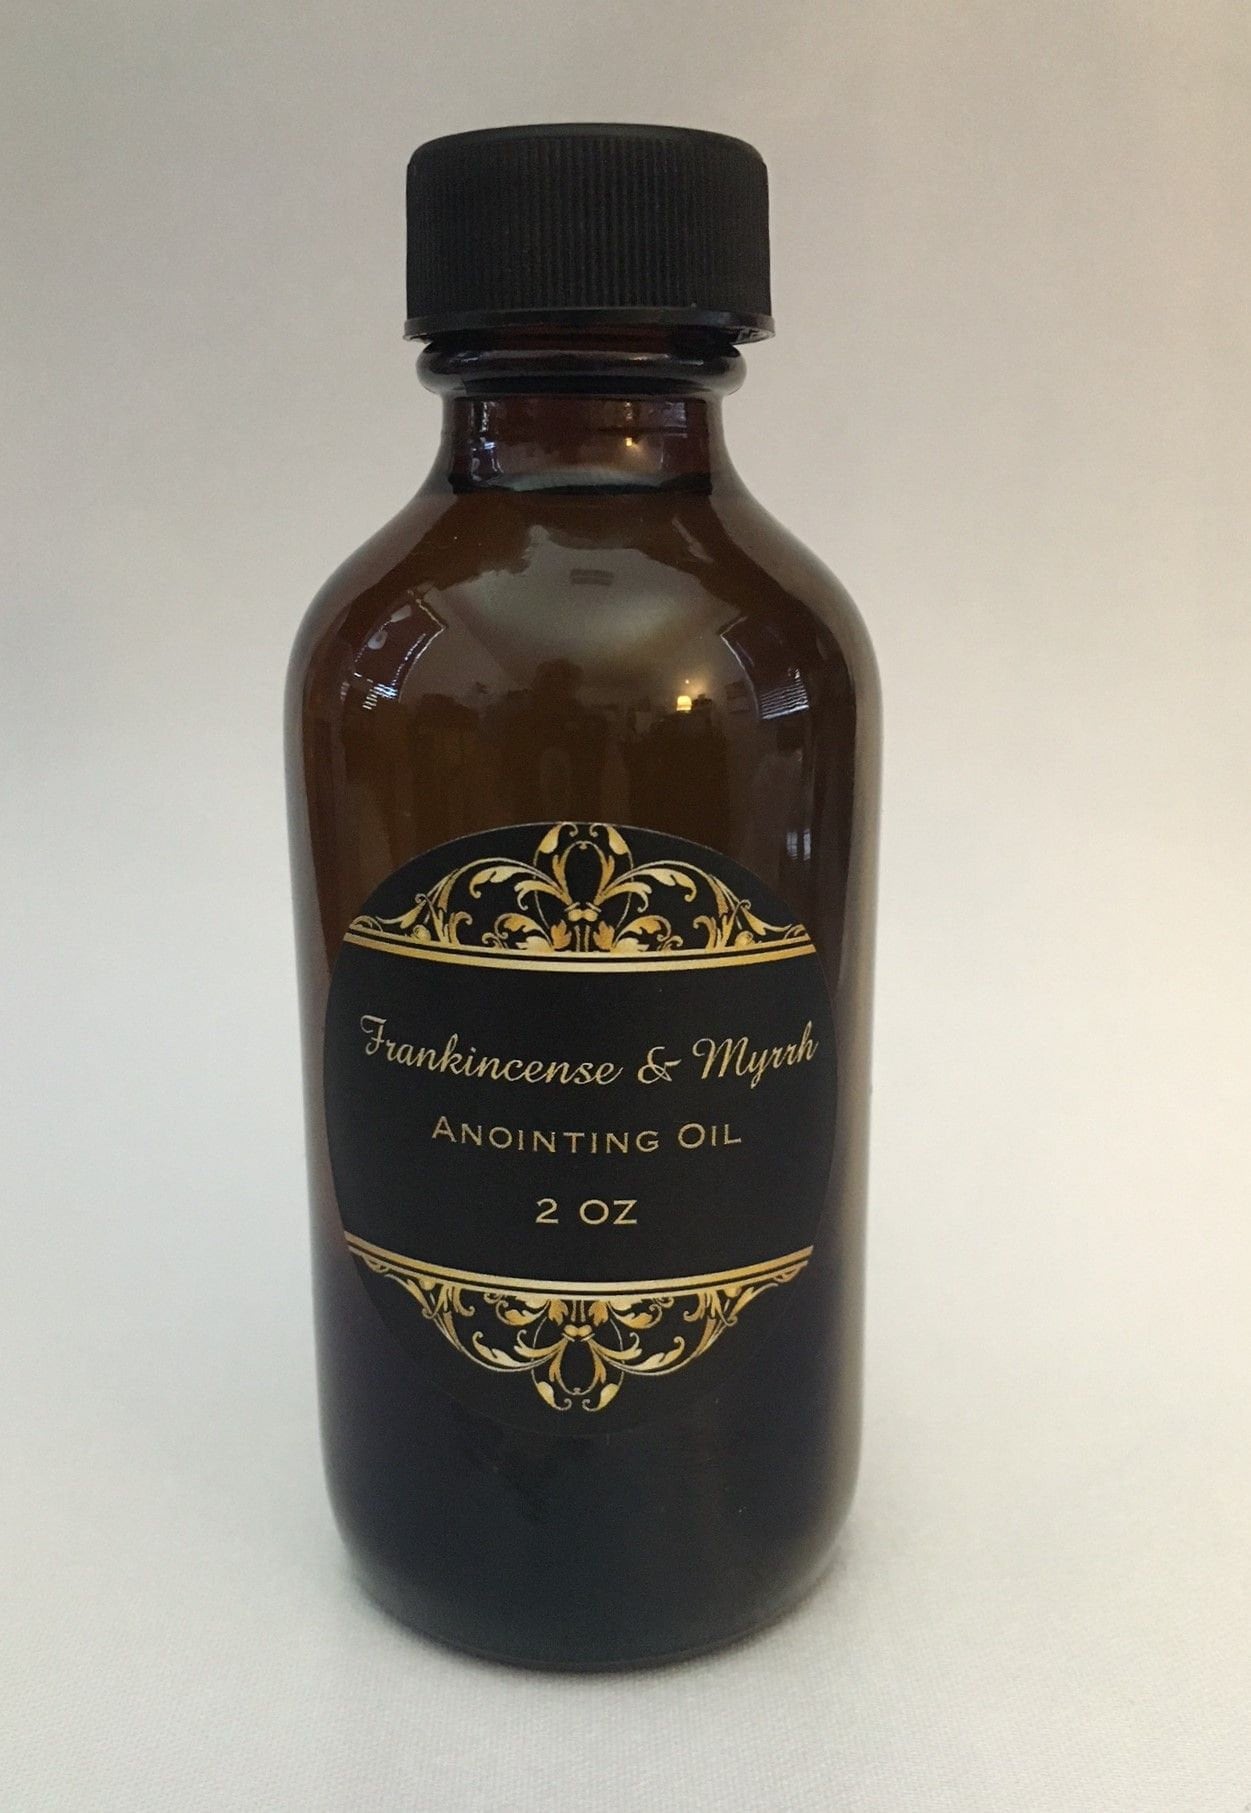 Frankincense & Myrrh Body Powder-4.5 Oz 